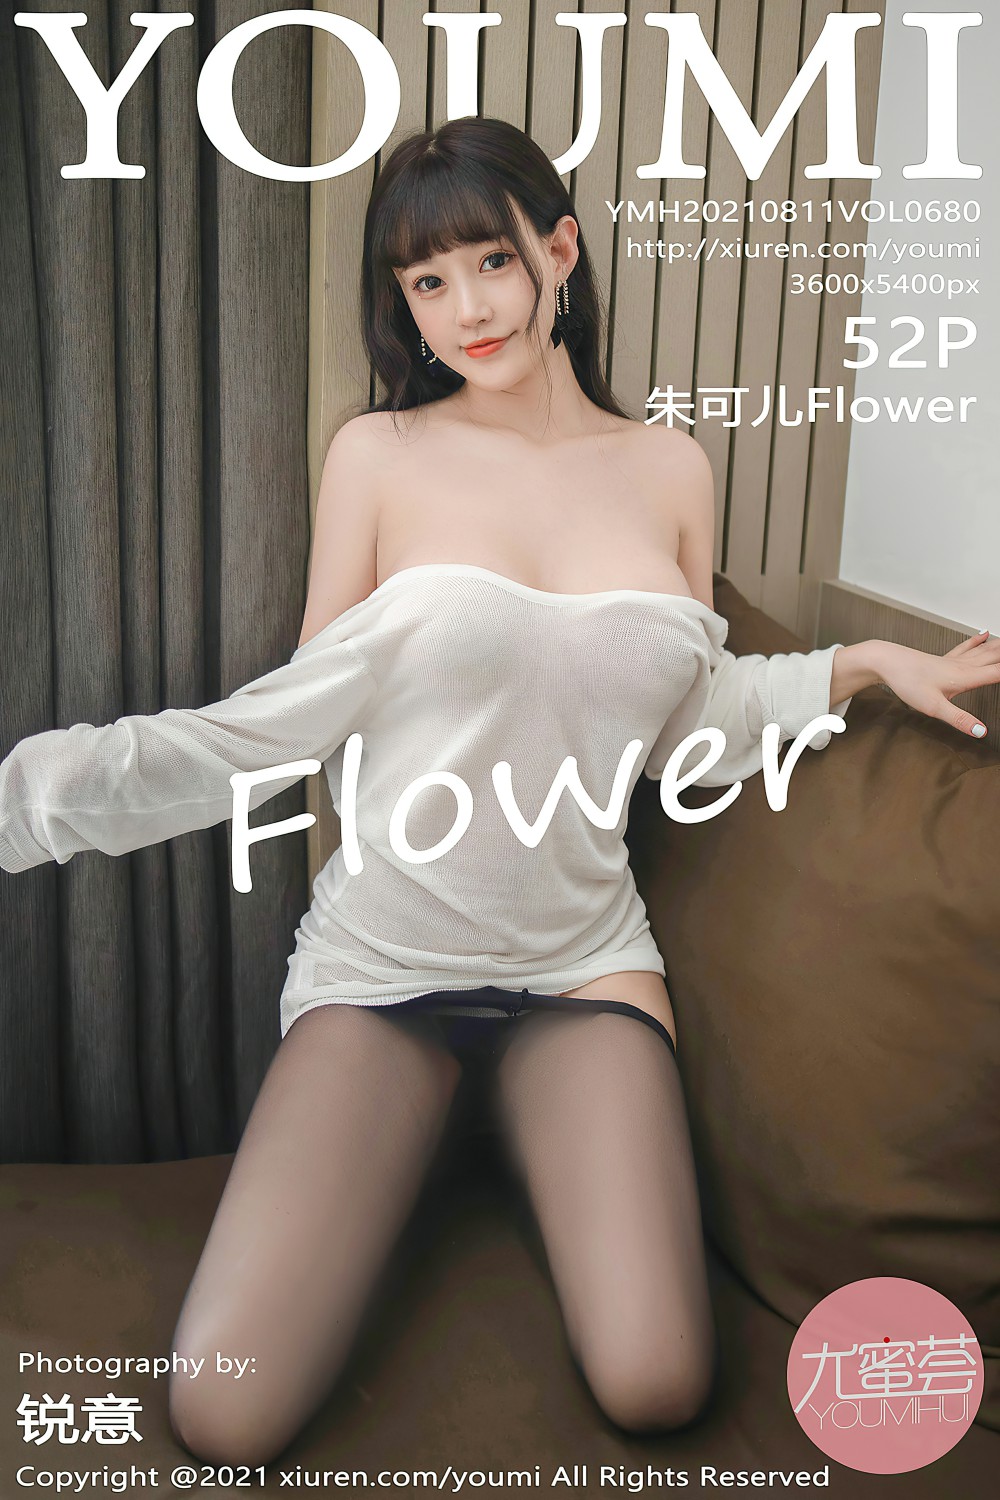 [YOUMI尤蜜荟] 2021.08.11 VOL.680 朱可儿Flower [52P580MB]